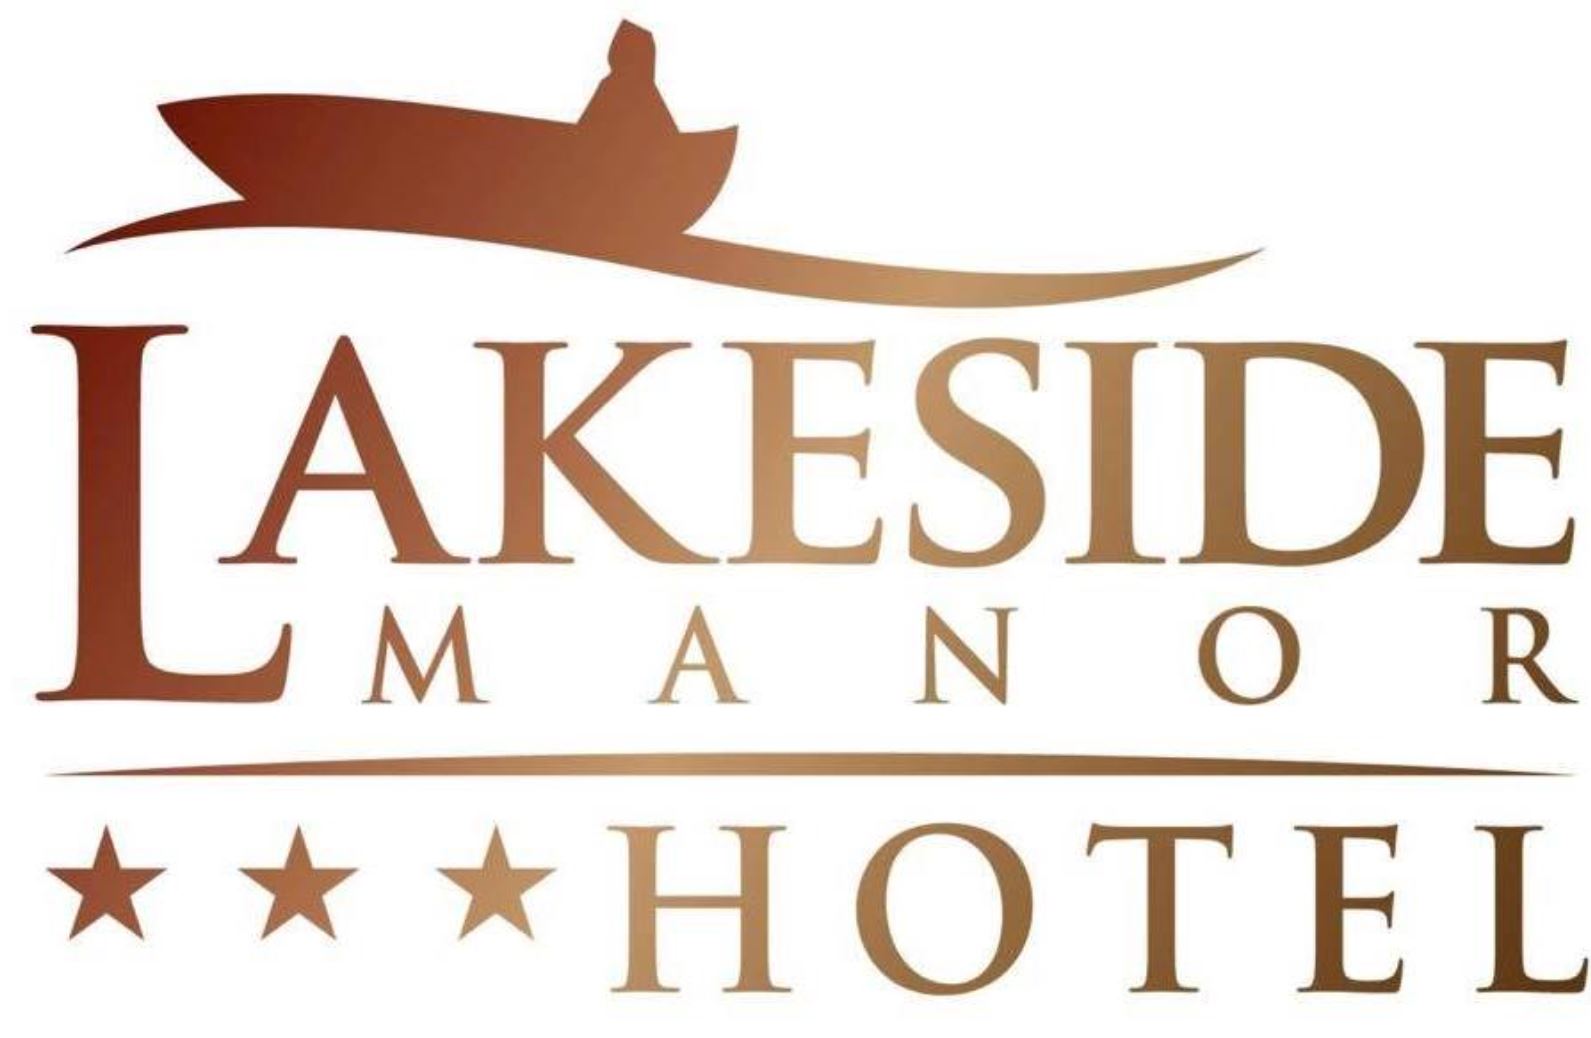 Lakeside Manor Hotel